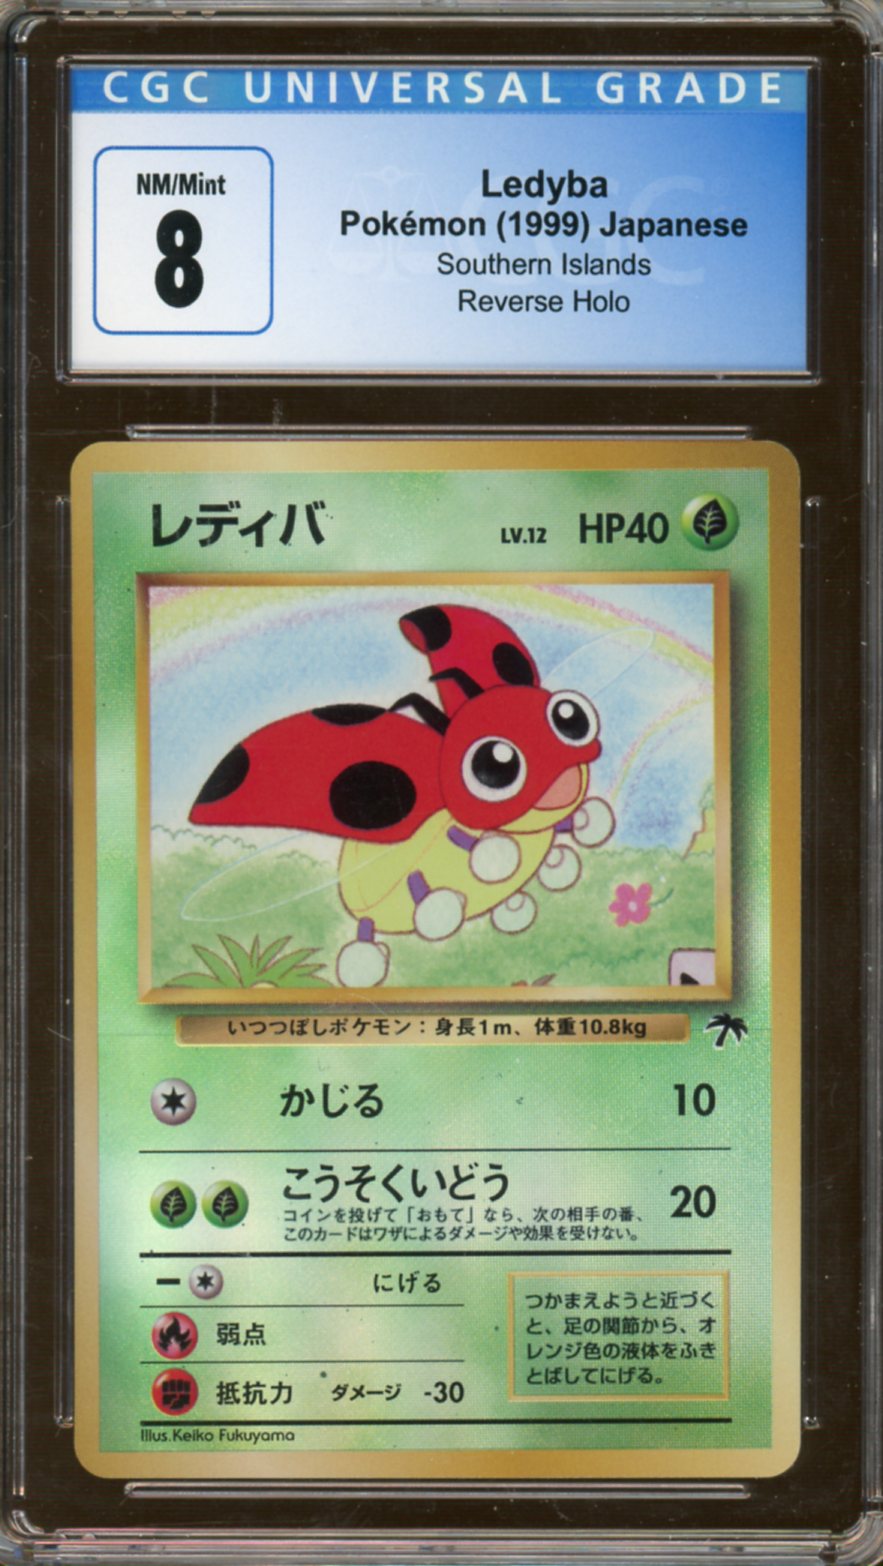 CGC NM/Mint 8 - 1999 Pokémon - Southern Islands - Ledyba Reverse Holo (Japanese)